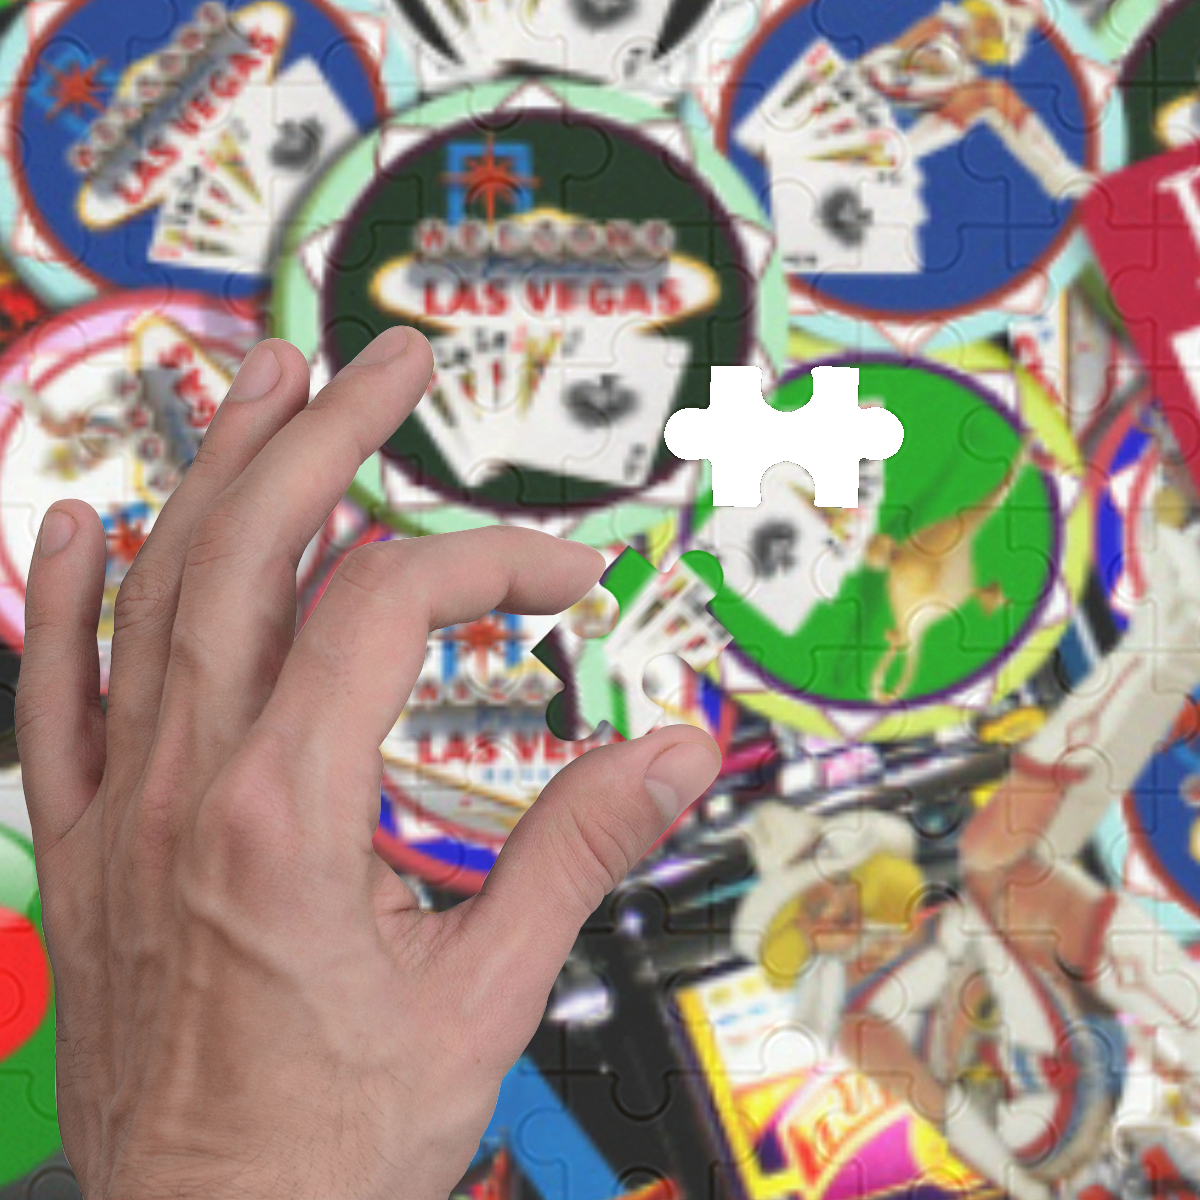 Gamblers Delight - Las Vegas Icons 1000-Piece Wooden Photo Puzzles